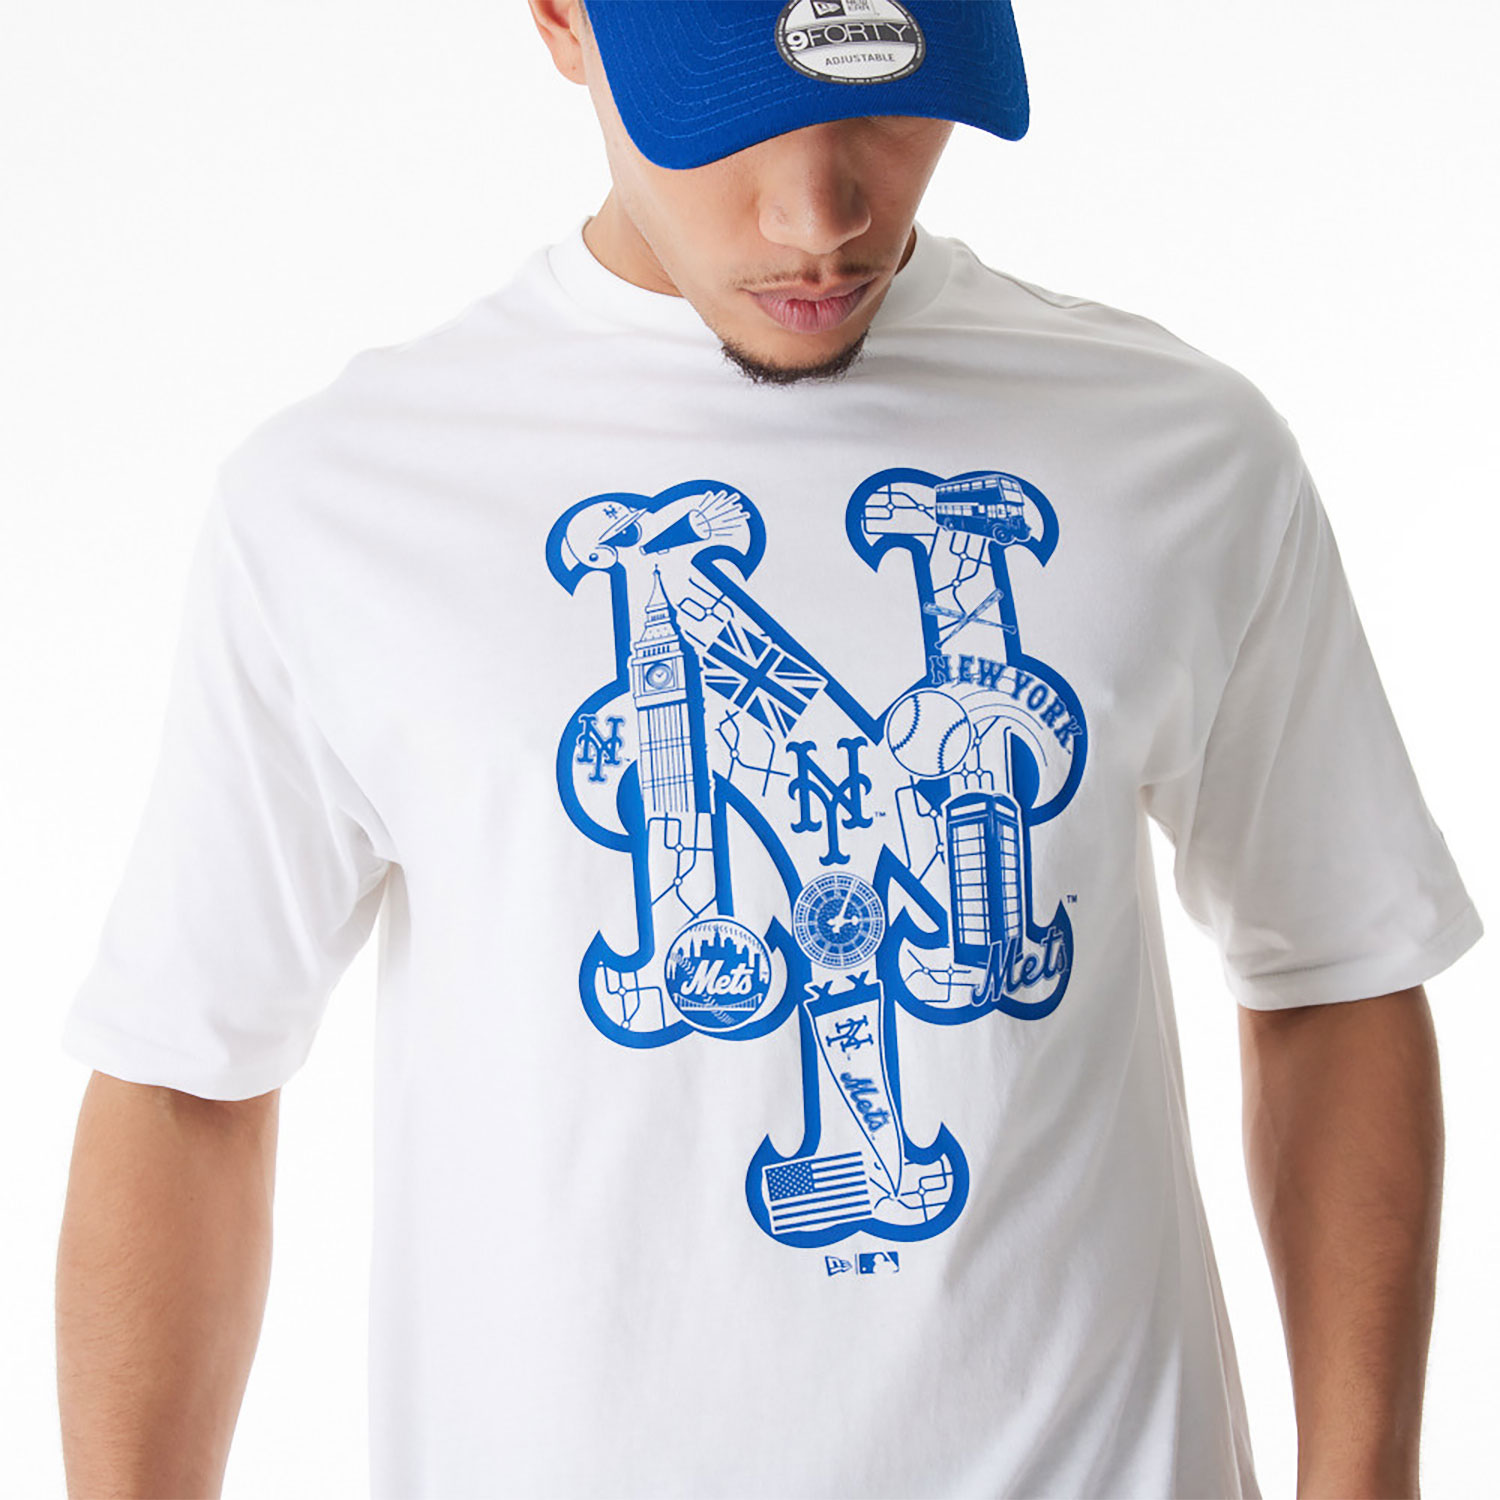 New York Mets MLB London Series 2024 City Weißes Oversized T-Shirt